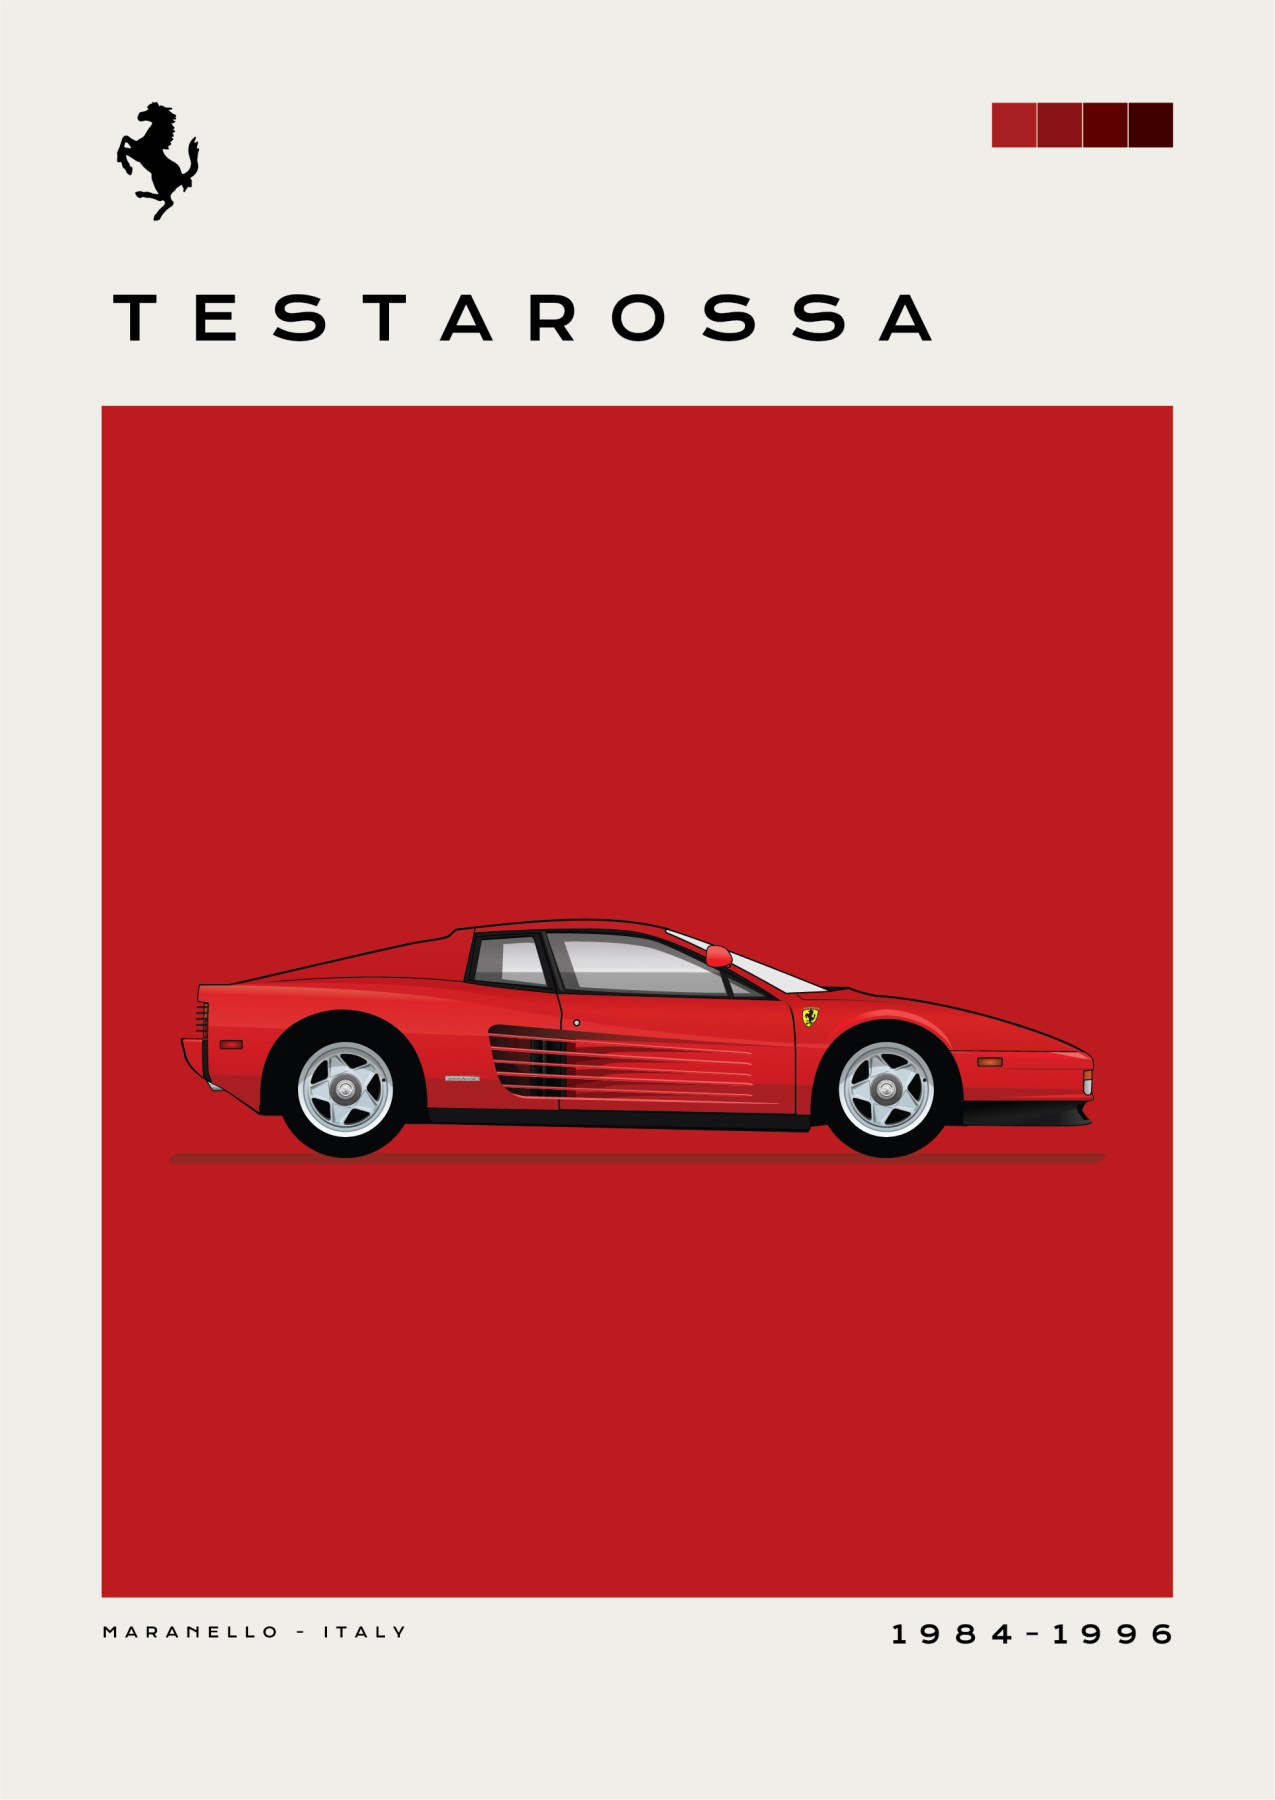 Ferrari - Testarossa - Red